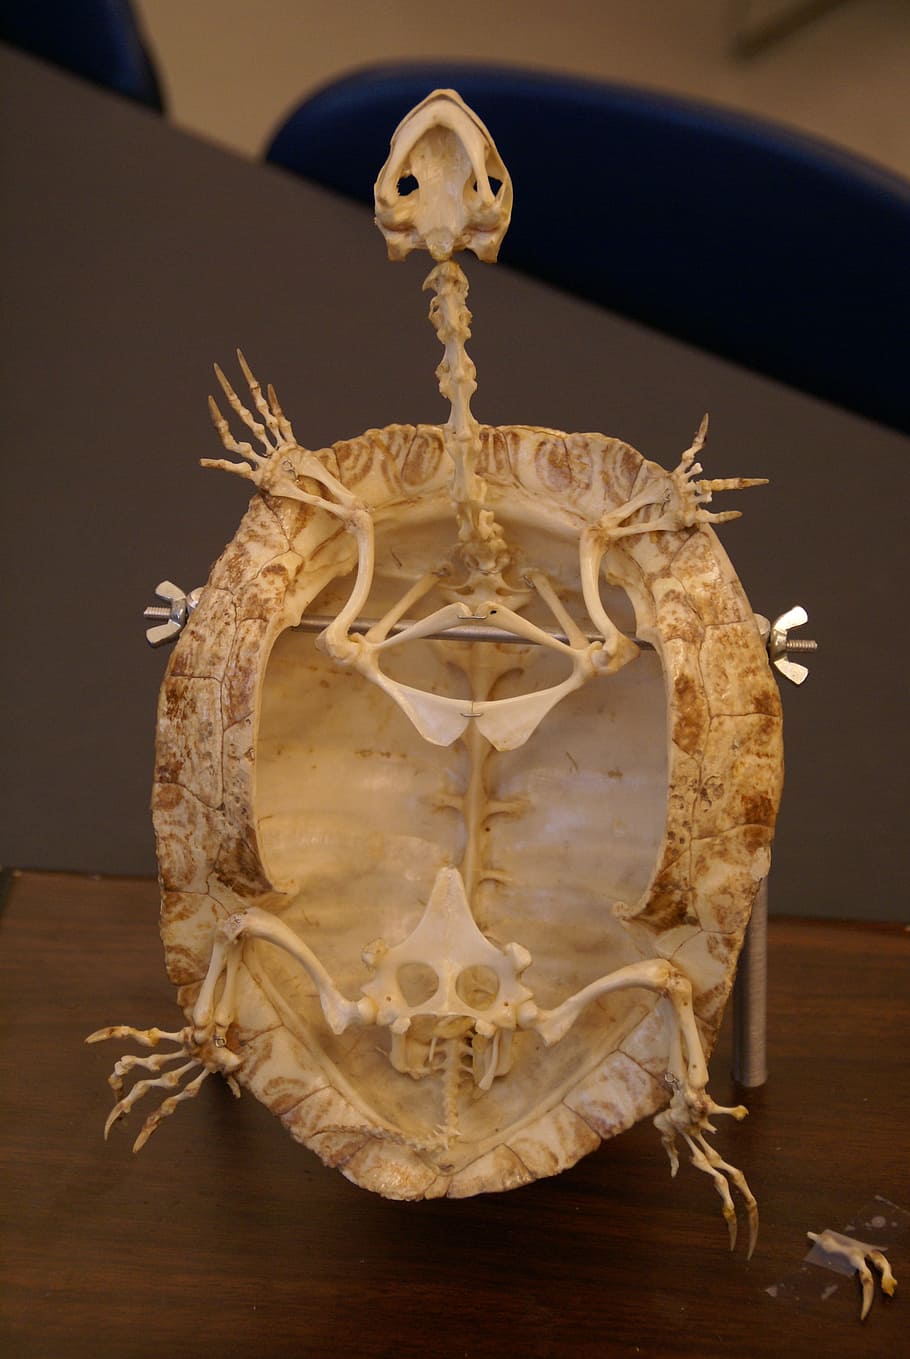 turtle, skeleton, fossil, animal, reptile, close-up, macro, shell, bones, archeology